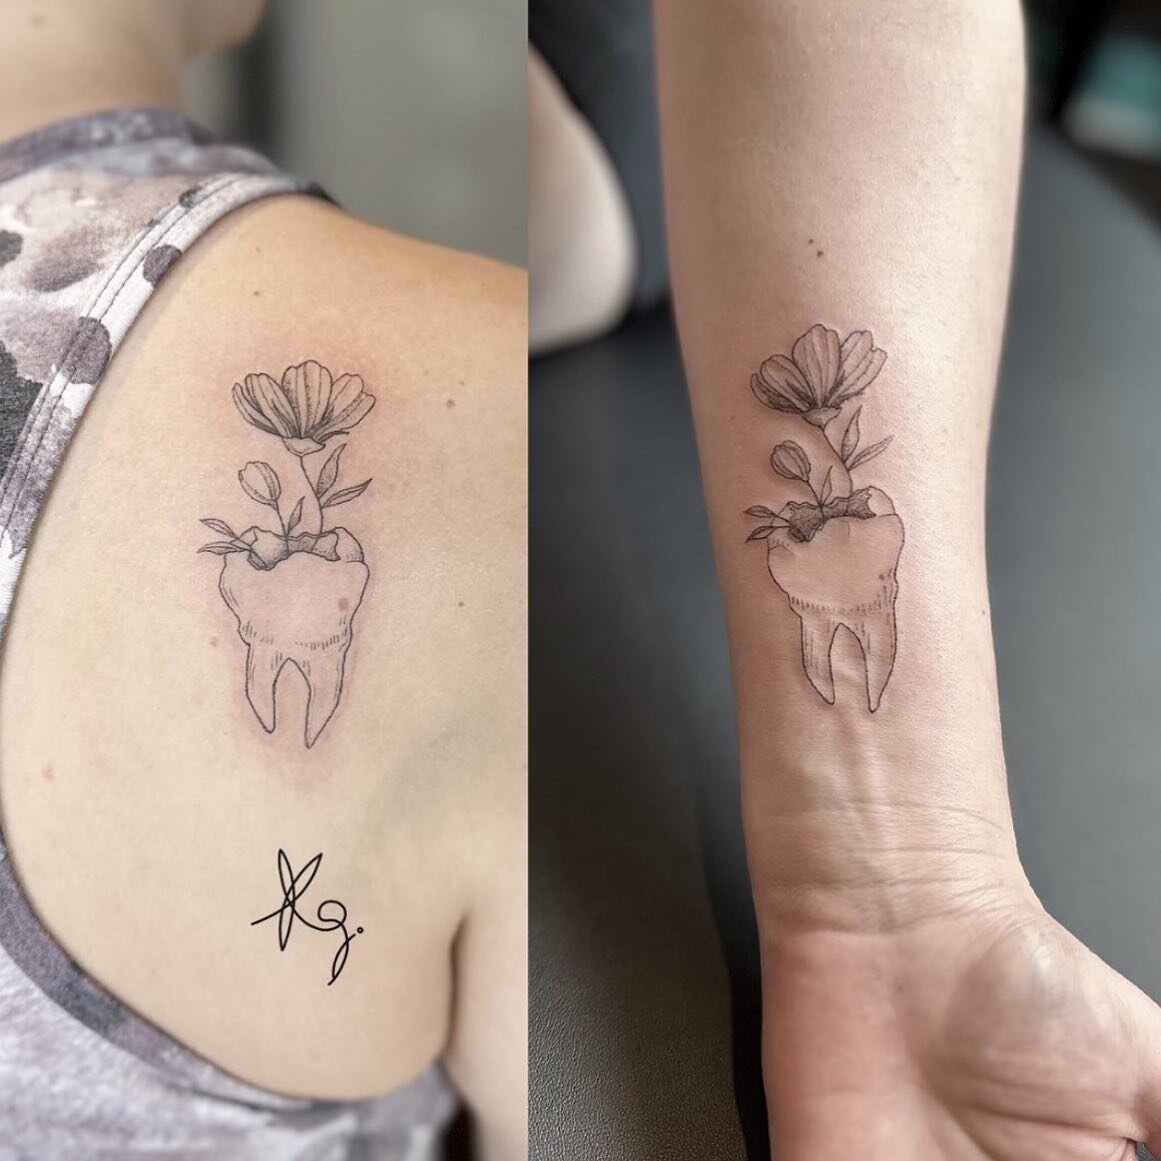 kellikikcio on Instagram: “a season of growth 🖤🖤” | Silhouette tattoos,  Inspirational tattoos, Small tattoos